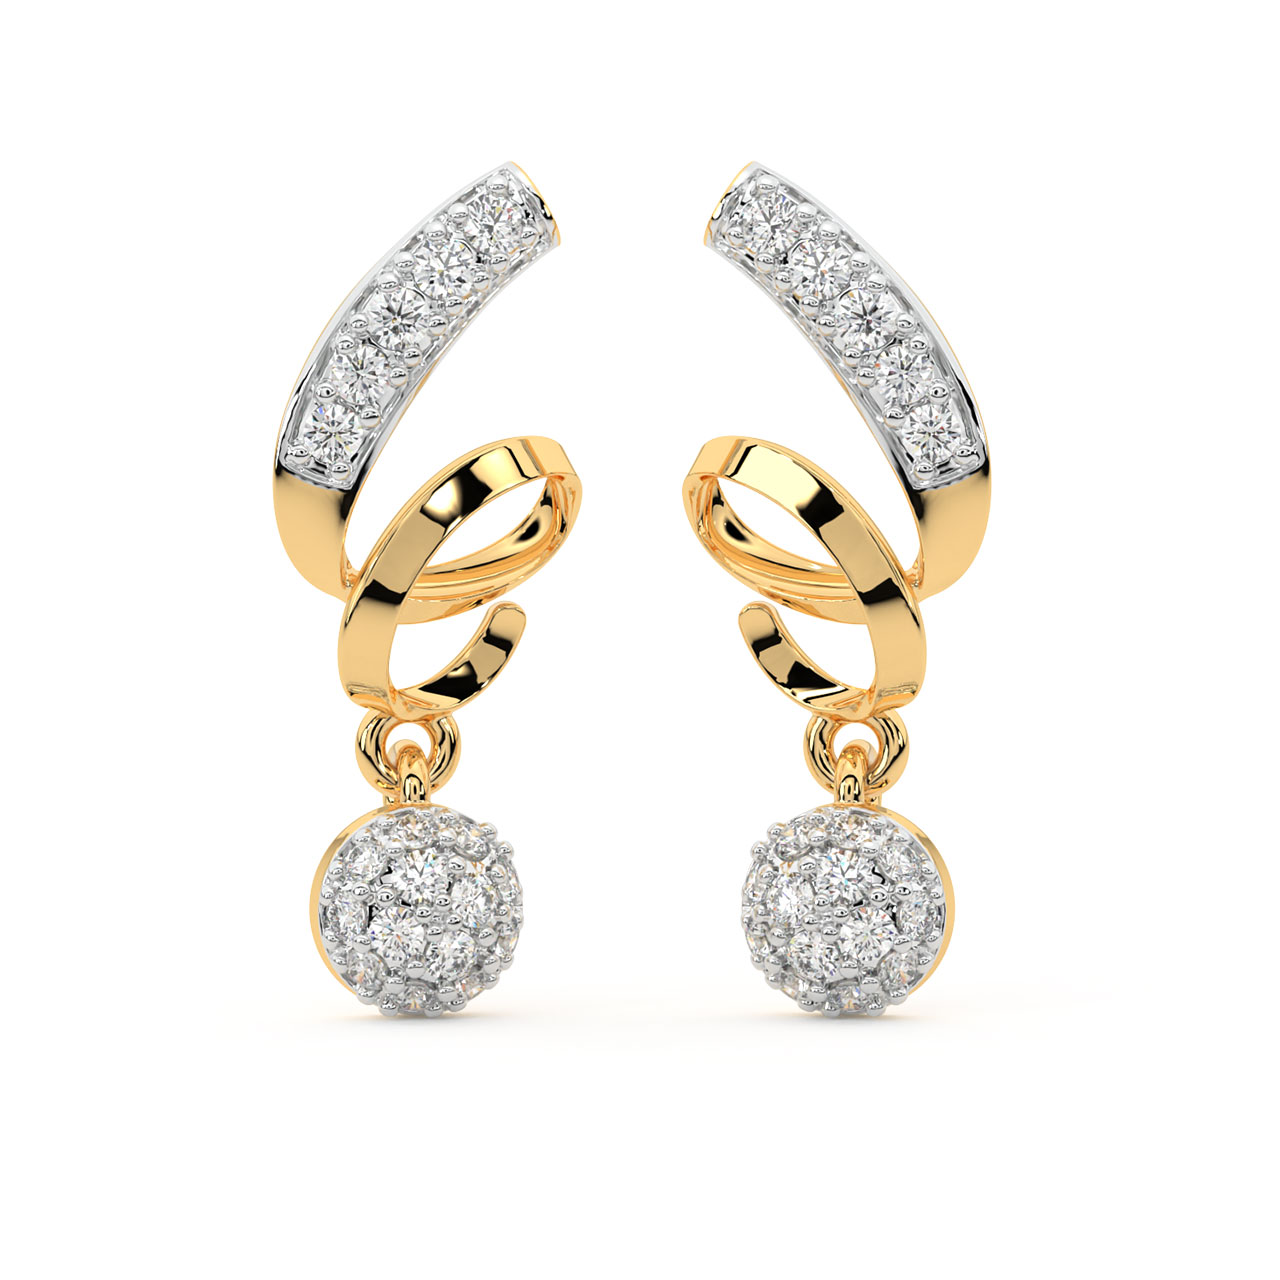 Jack Round Diamond Earrings